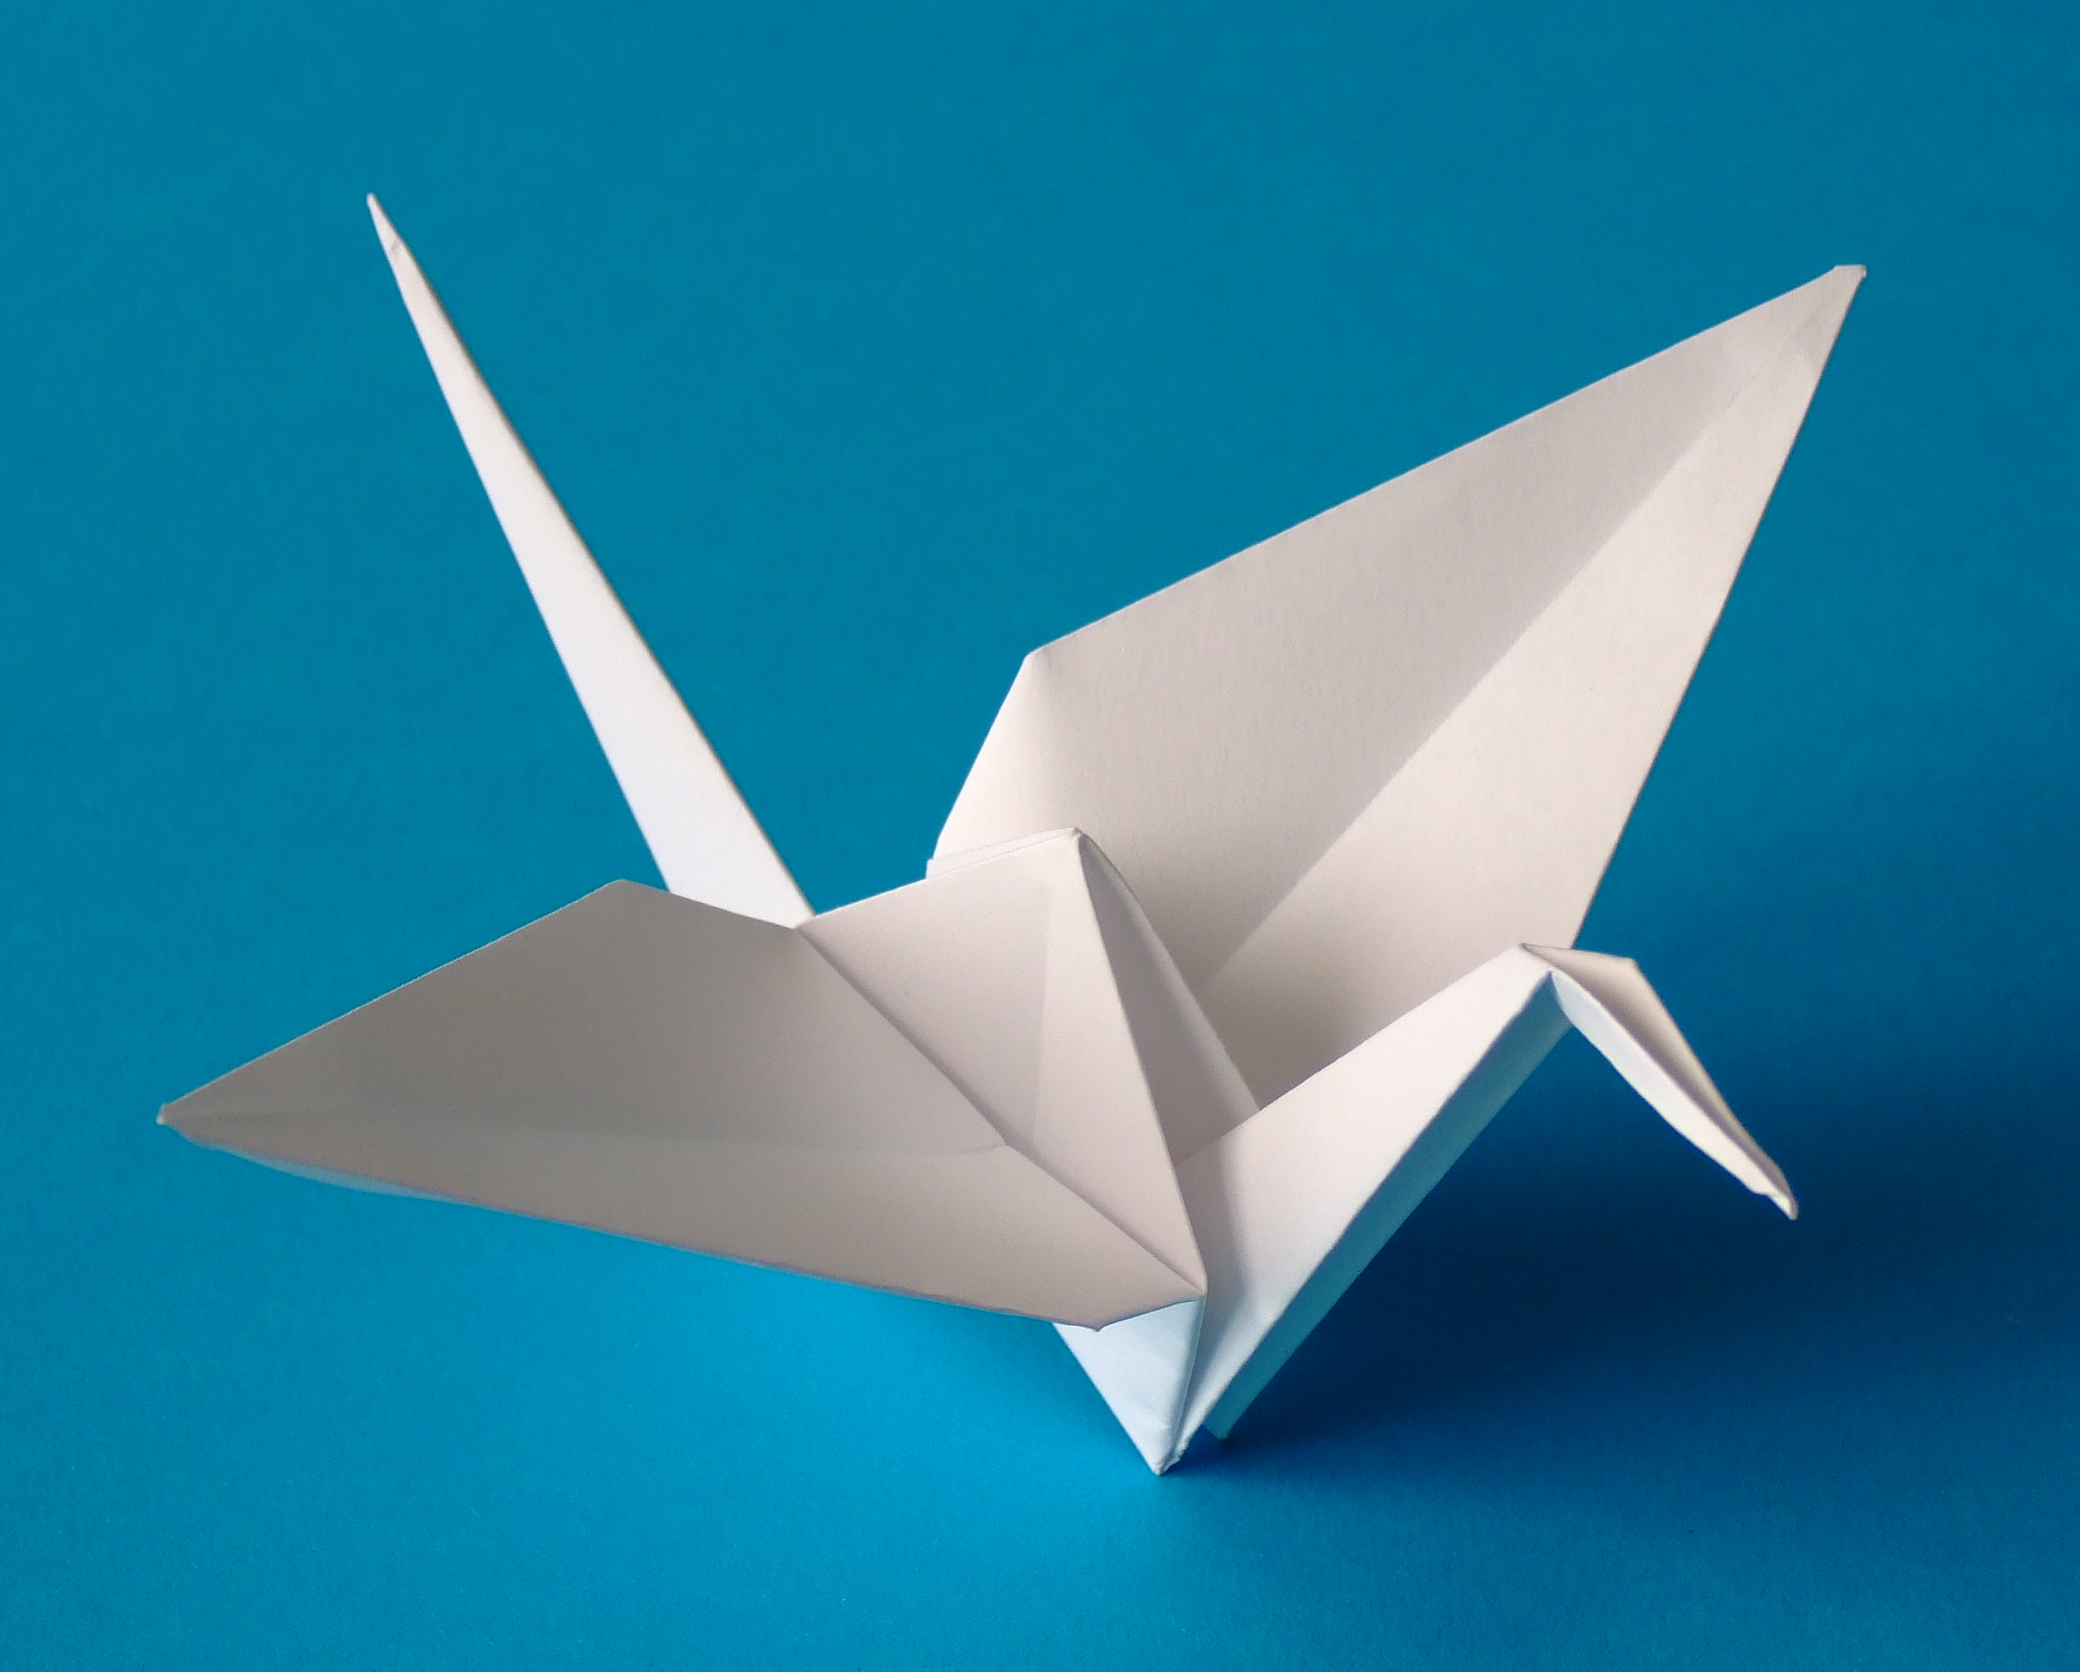 origami images